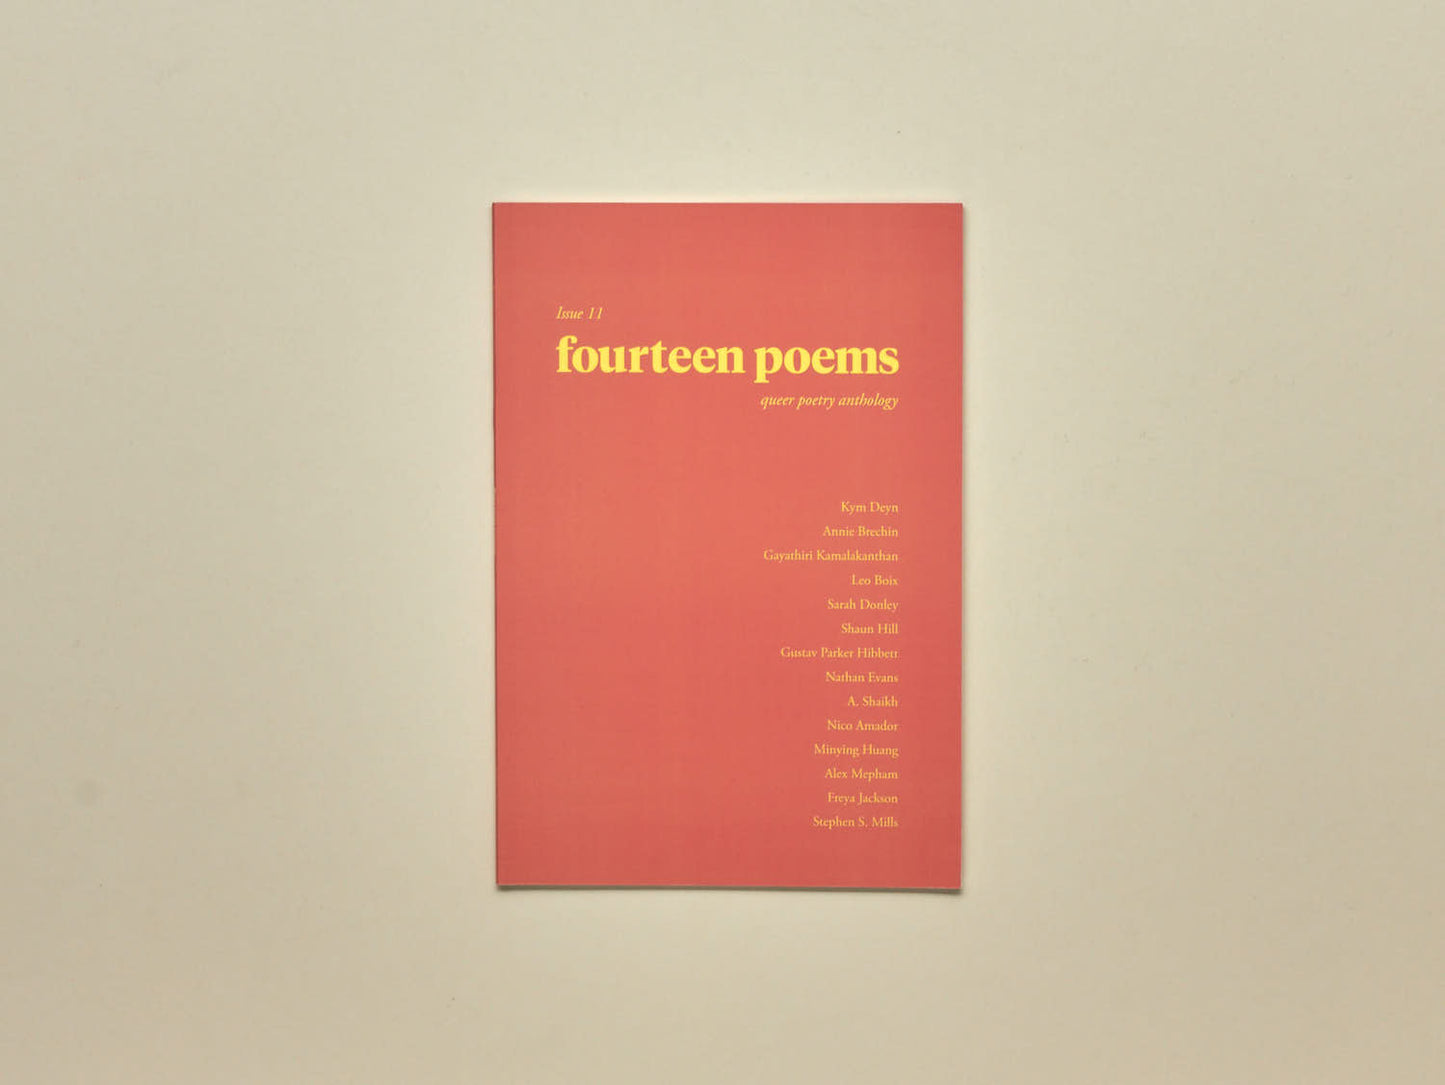 Fourteen Poems Issue 11